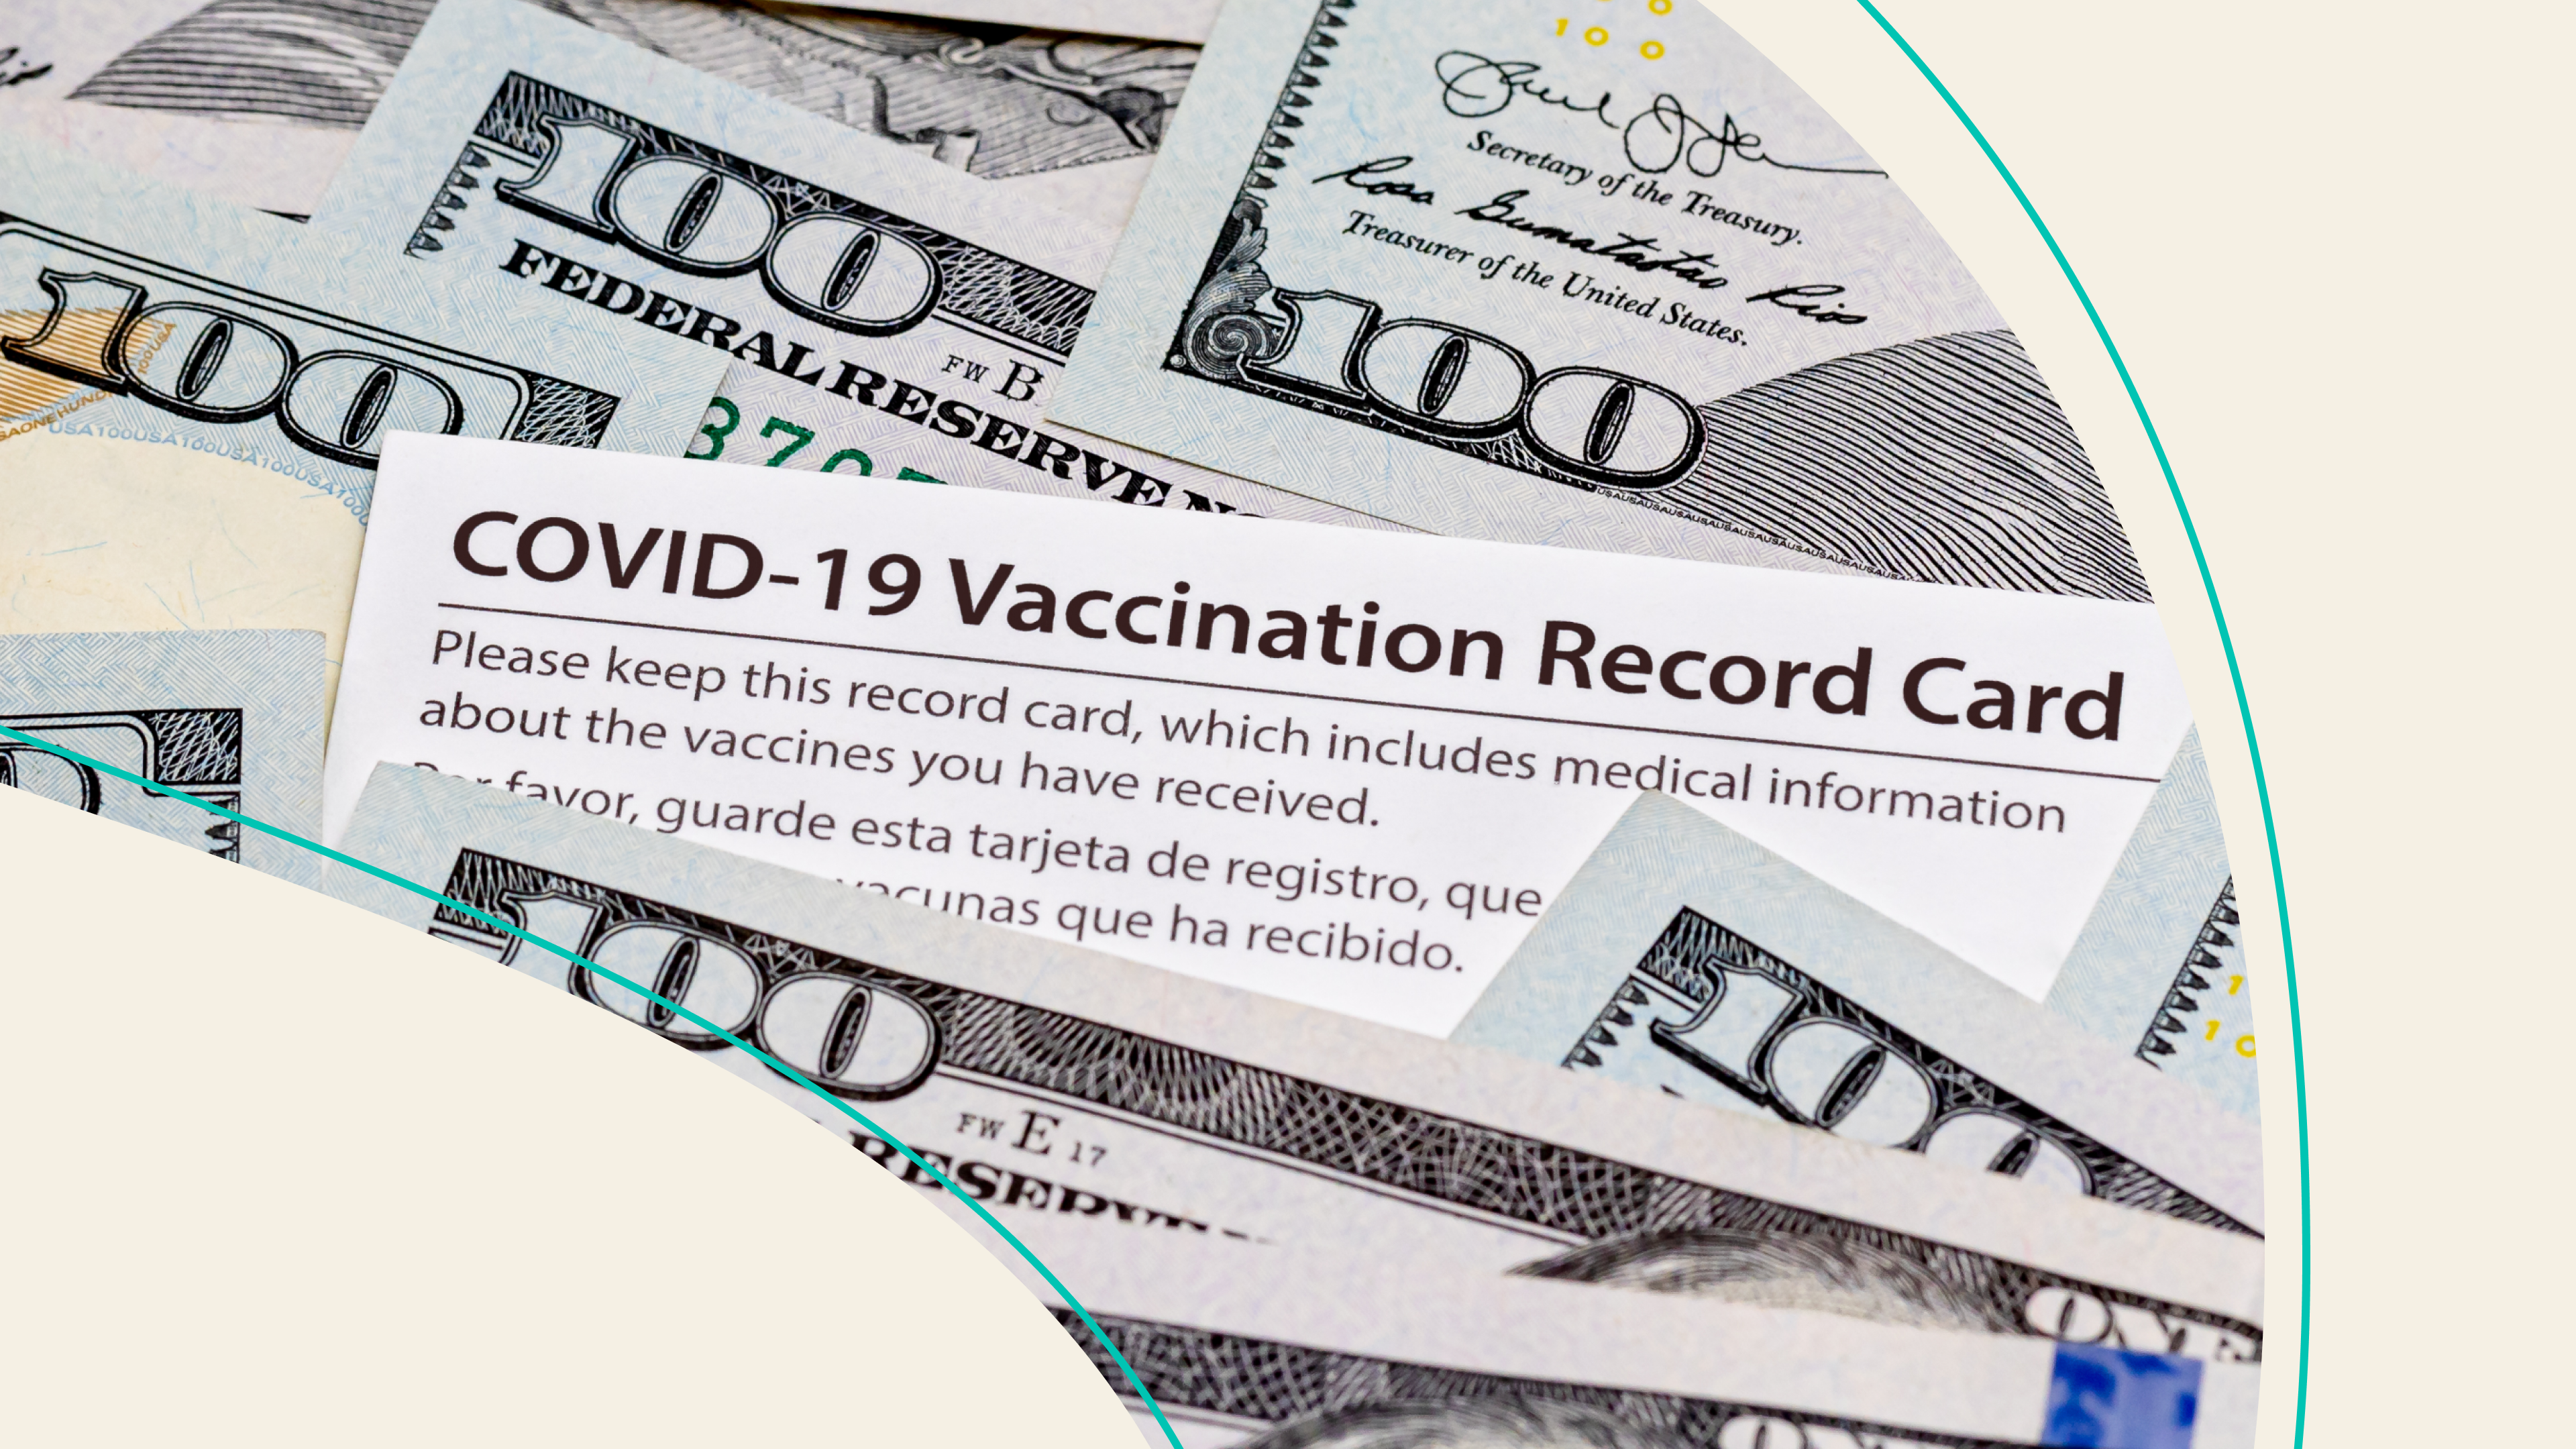 A covid vaccine record card among $100 bills.